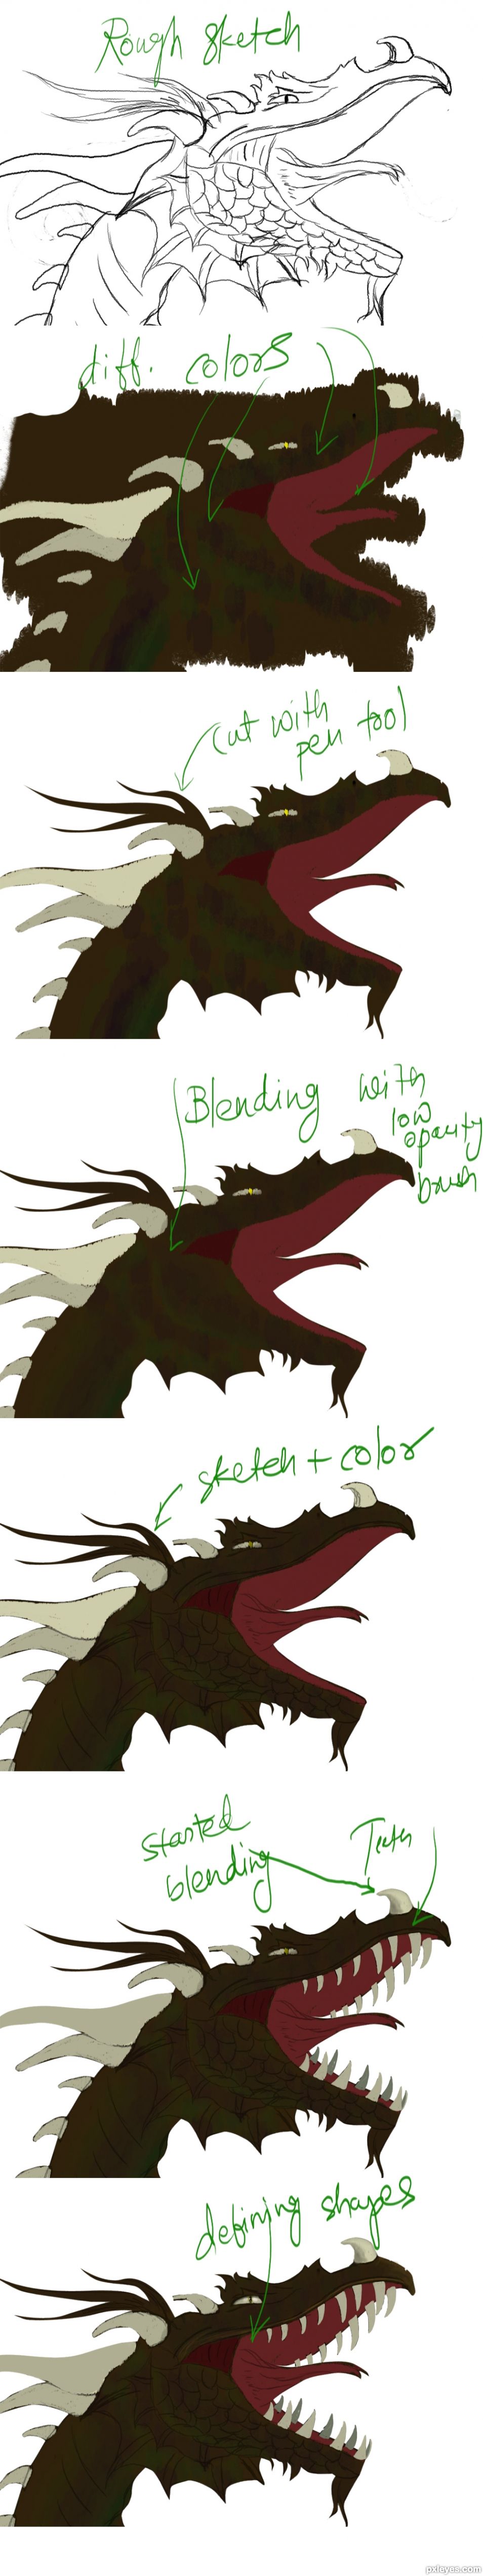 Creation of Dragon Roar: Step 1